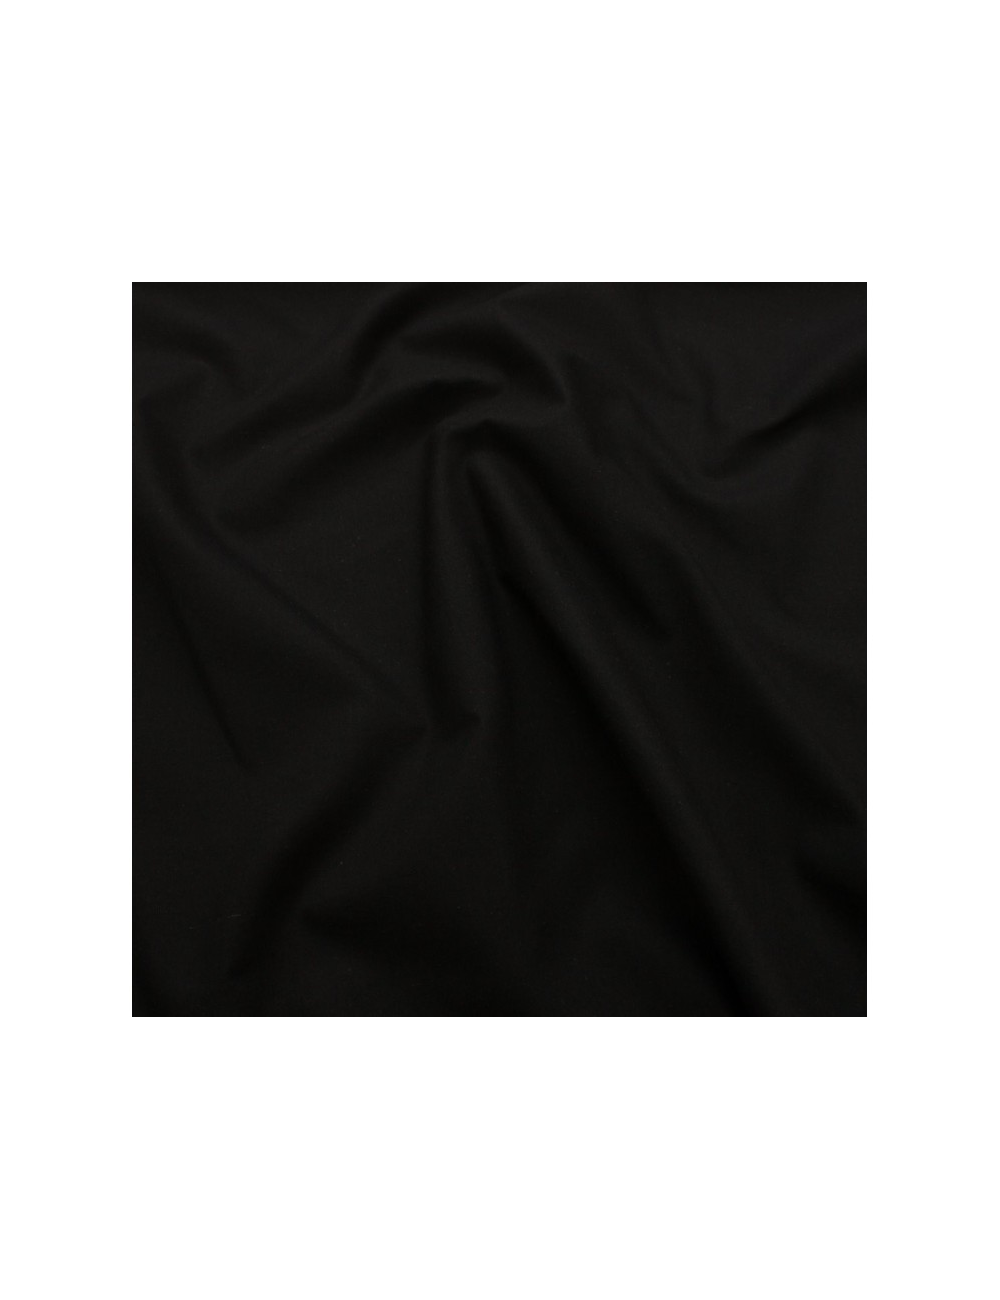 DISTRI SCENES - BLACK Brushed Cotton for stage dressing